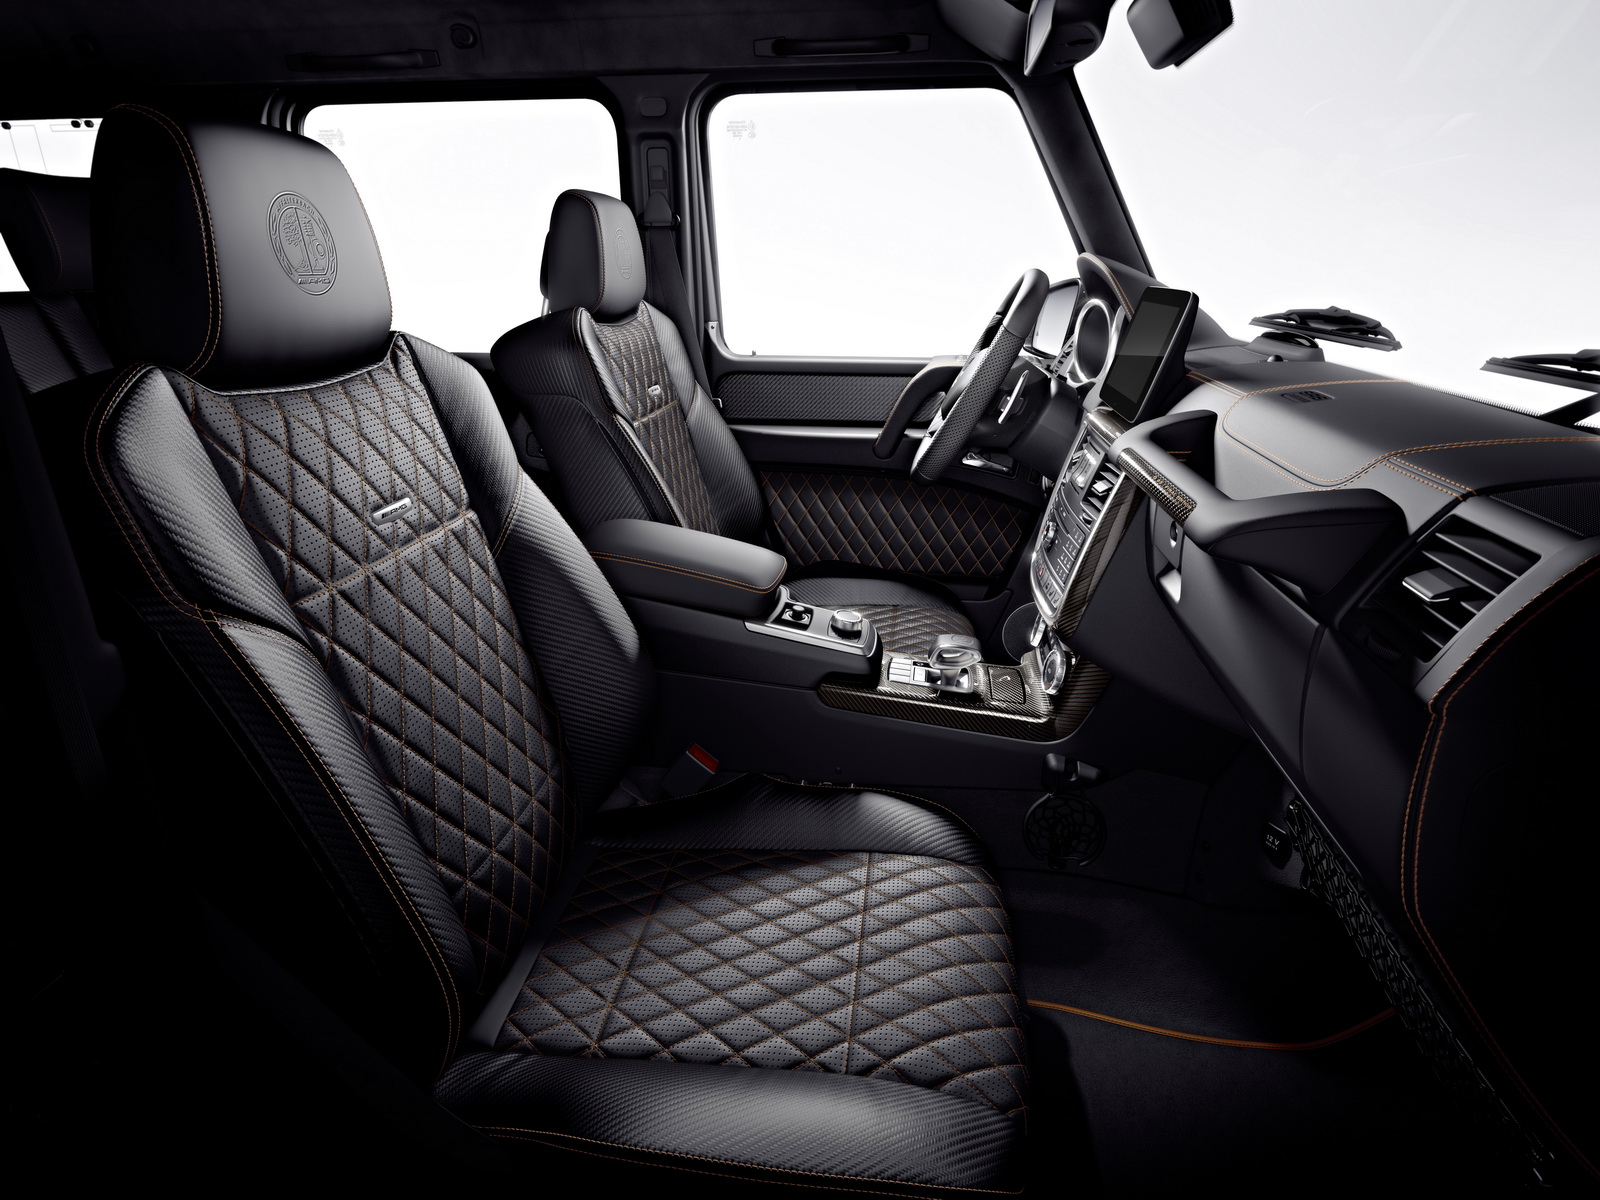 mercedes-amg-g65-final-edition-interior.jpg